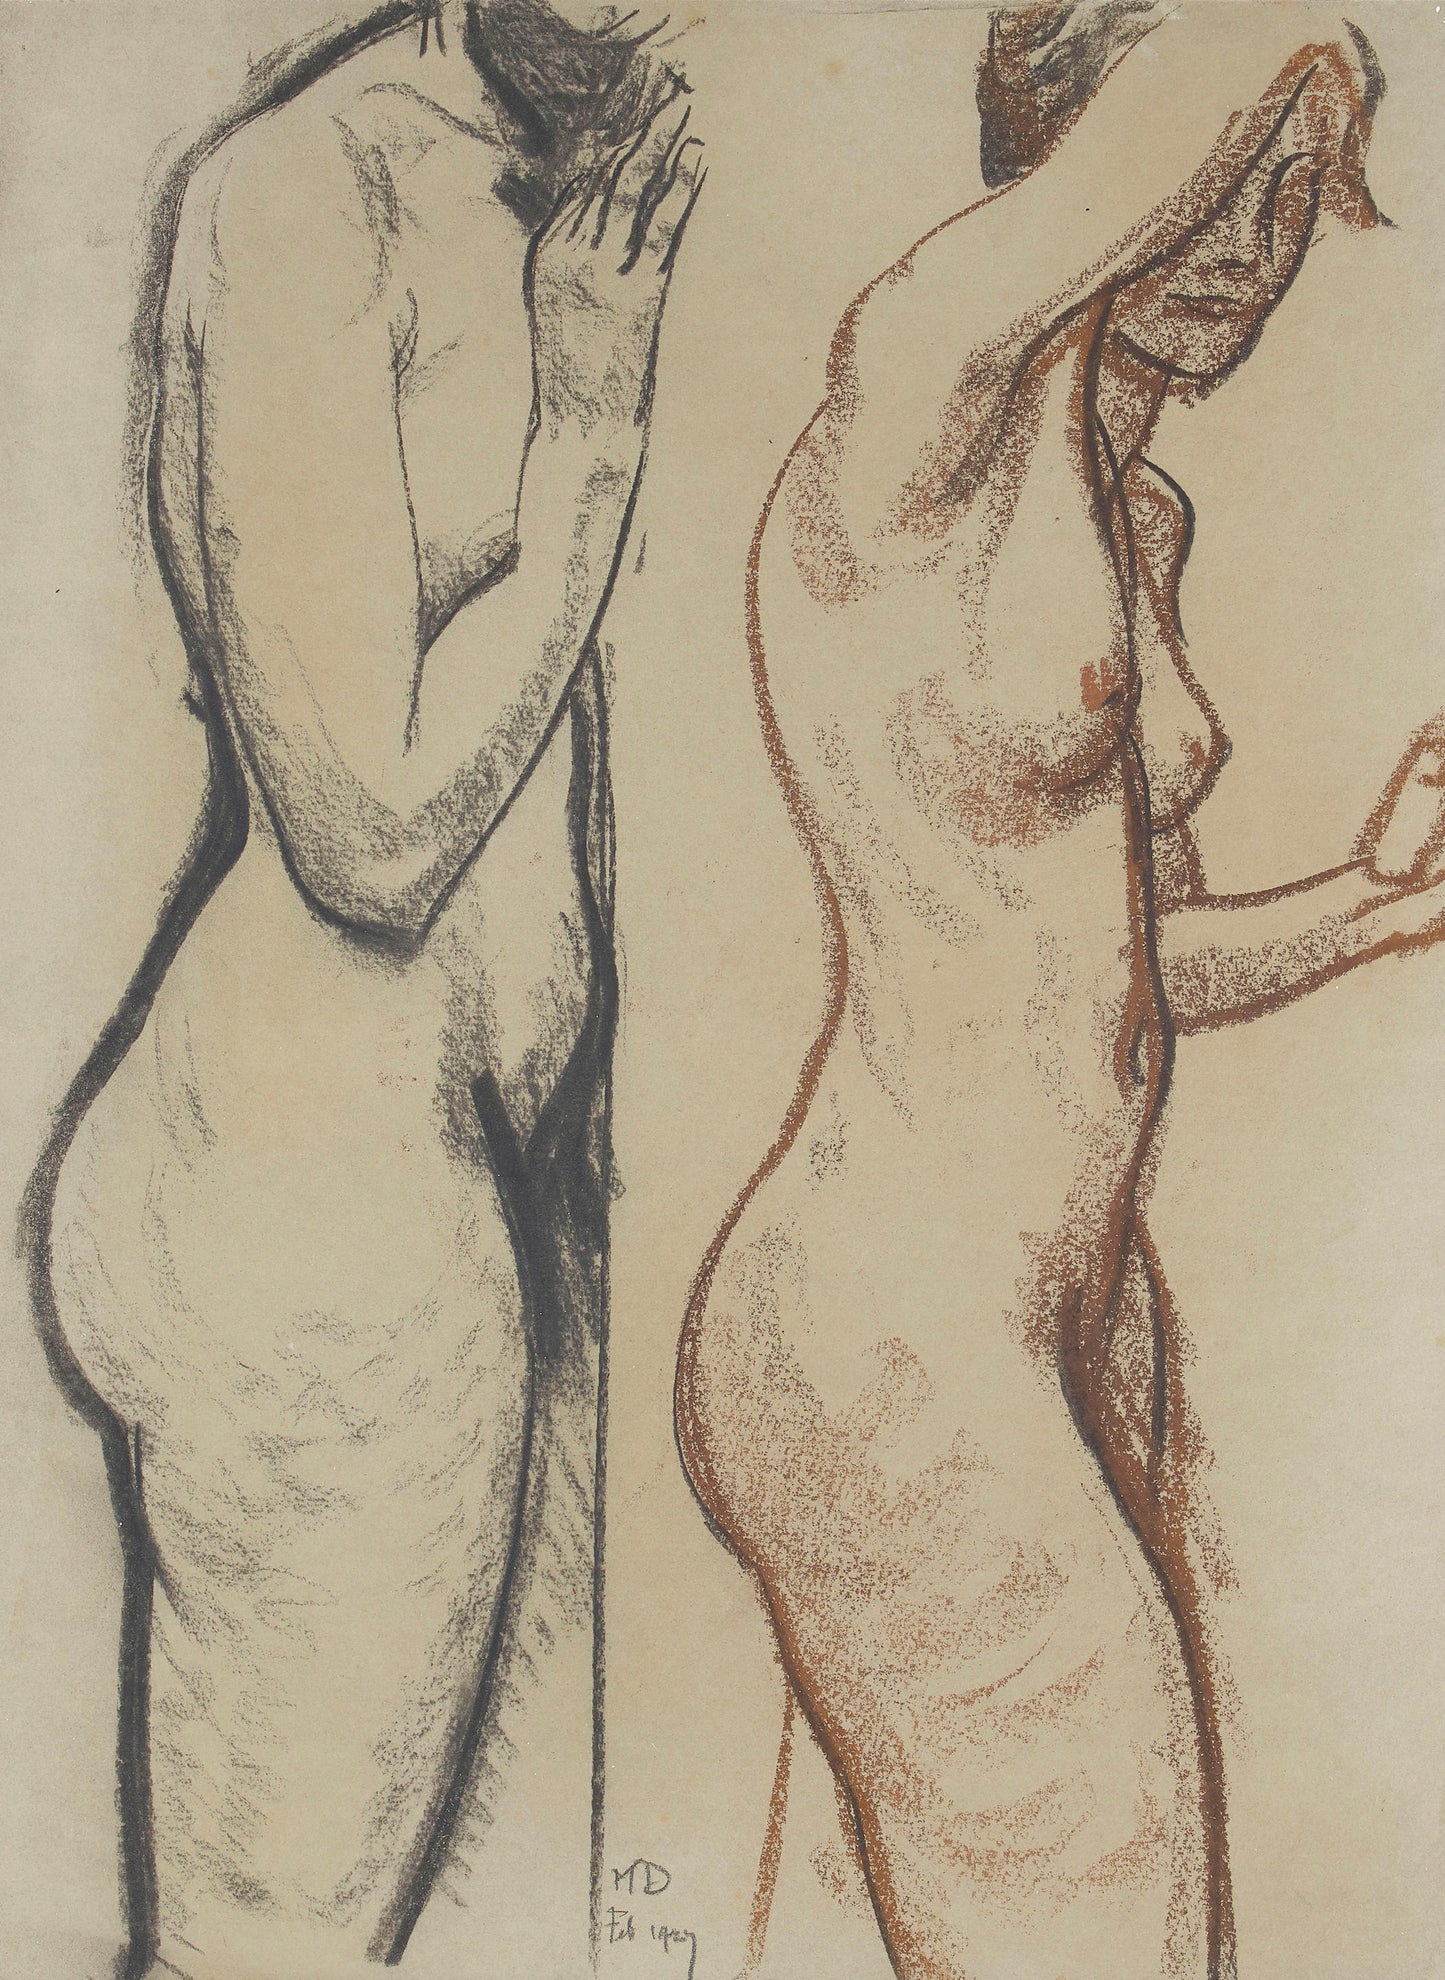 Maynard Dixon - Double Nude 1924 22.5" x 16.5"